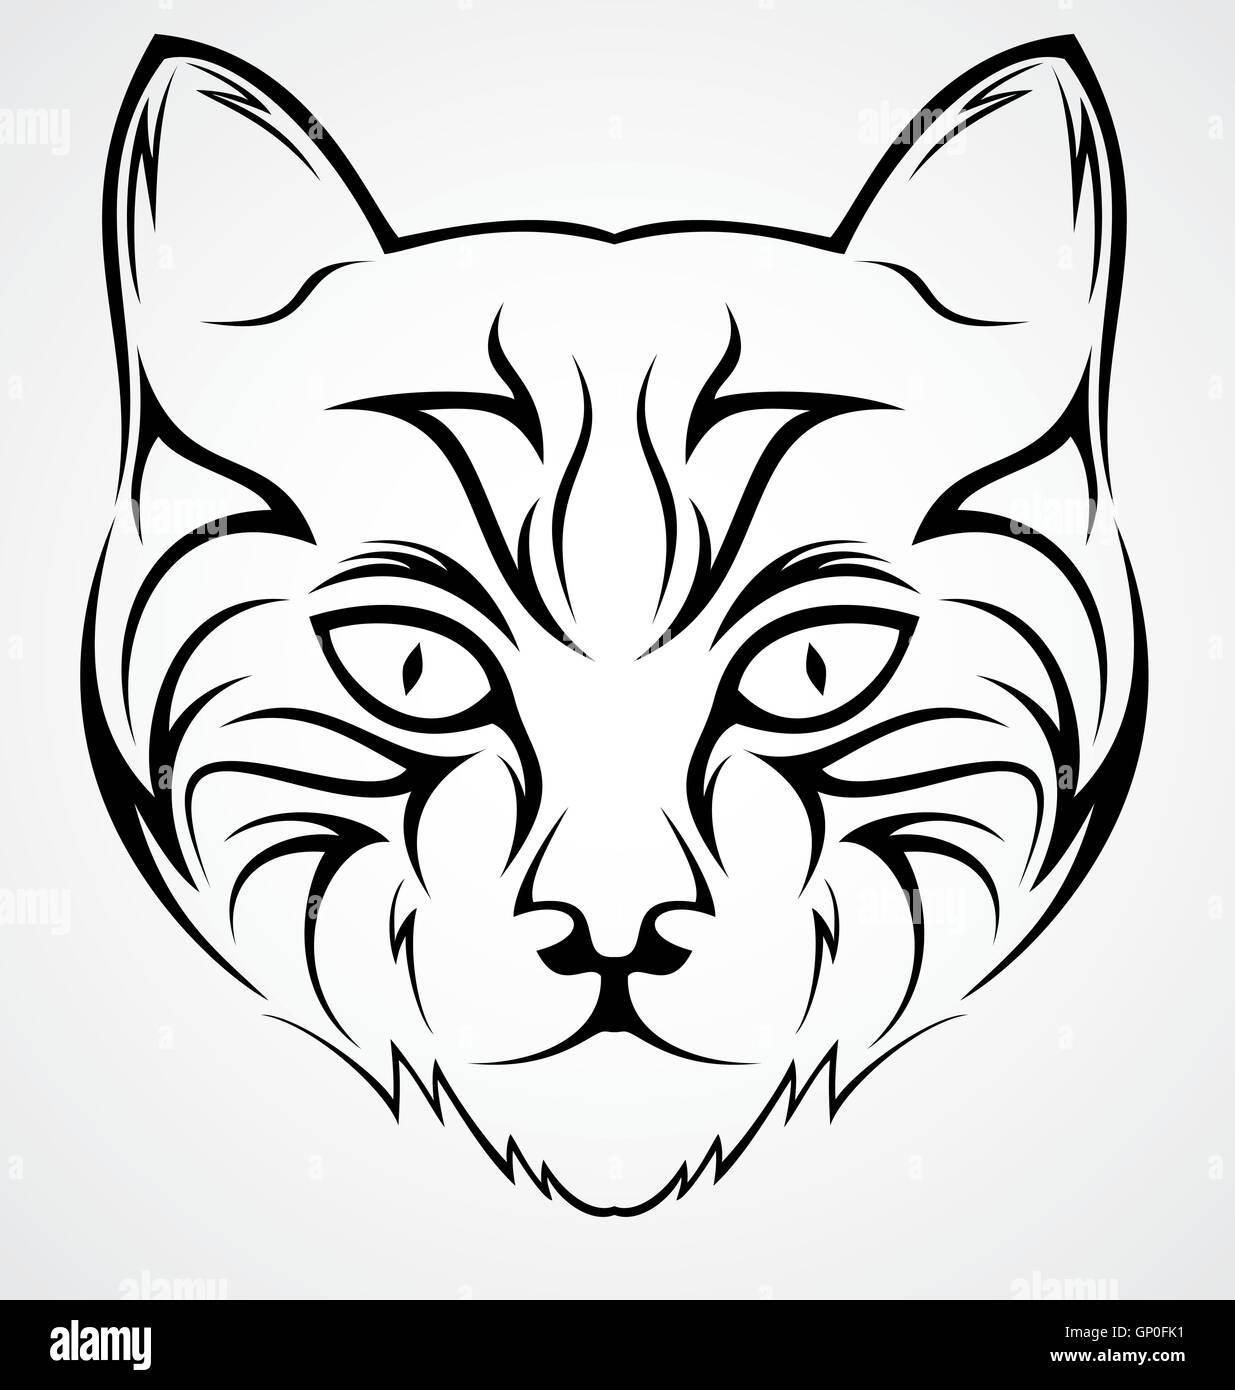 Cat Face Tattoo Design Illustrazione Vettoriale